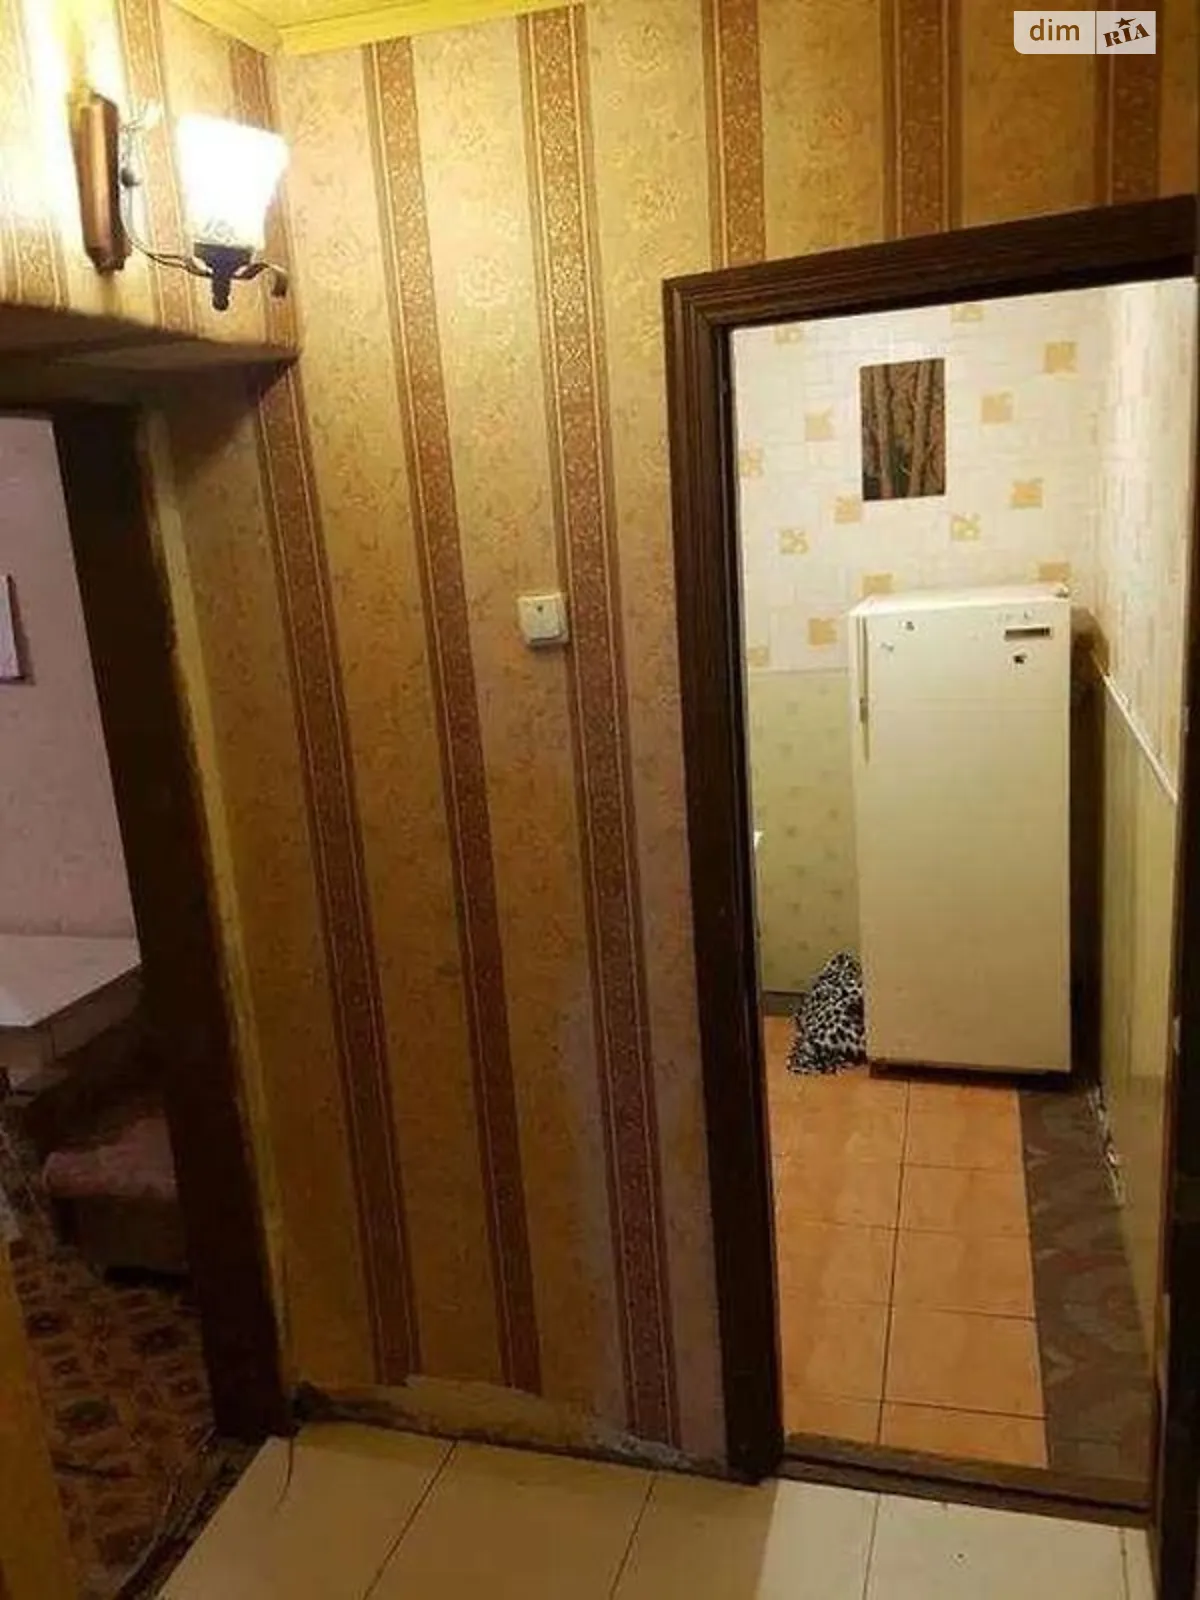 Продается комната 30 кв. м в Харькове - фото 3